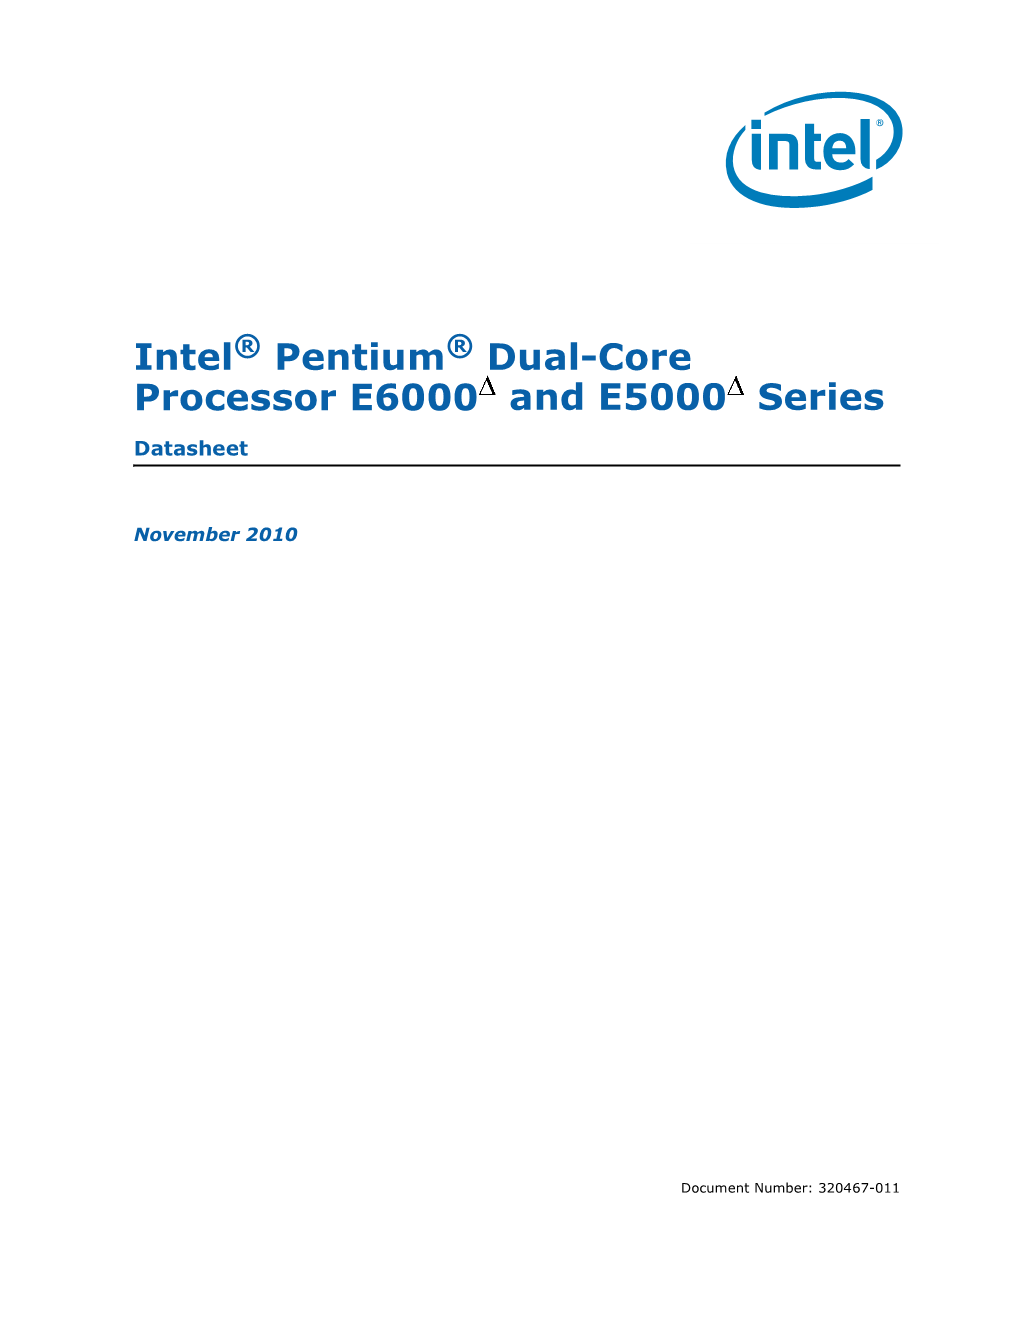 Intel® Pentium® Processor E6000/E5000 Series: Datasheet